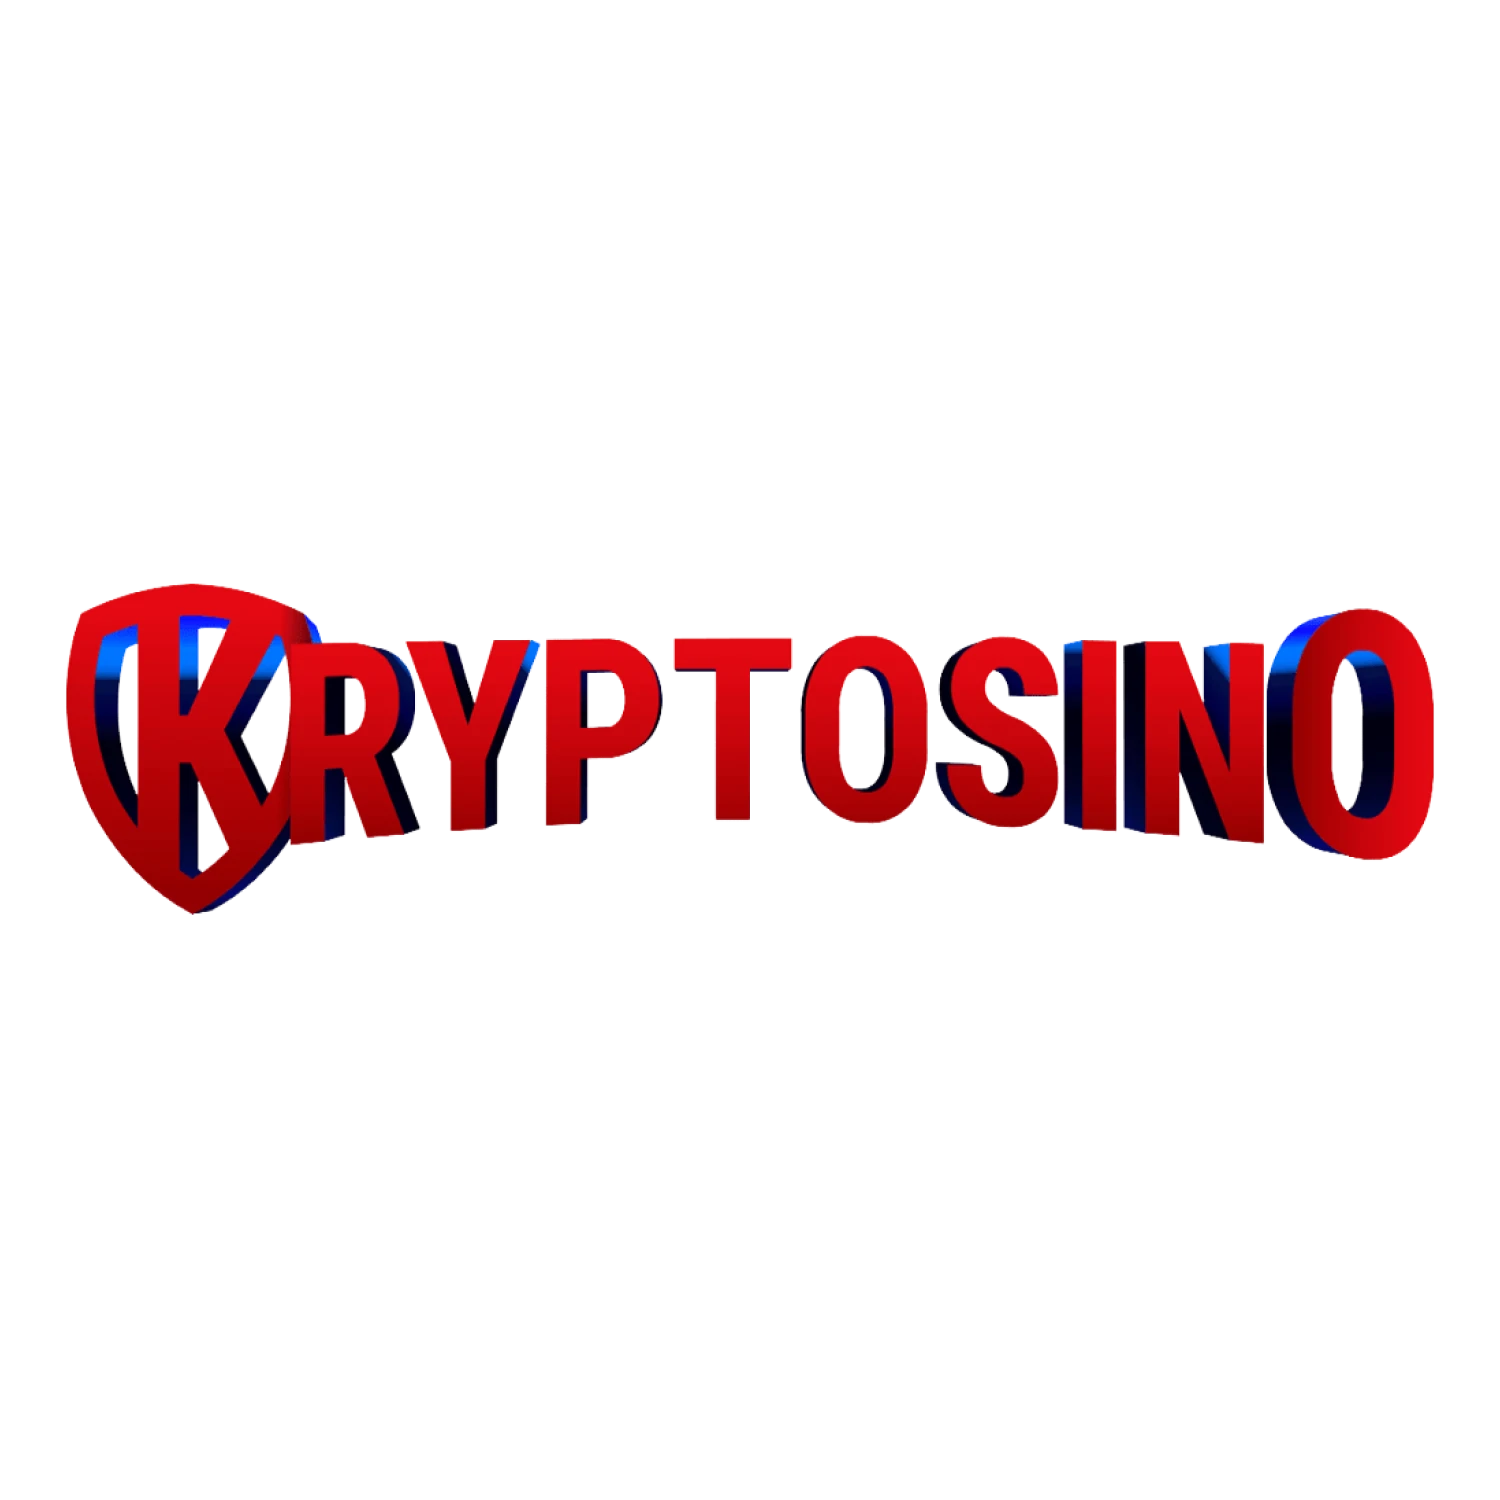 Try betting on Kryptosino, one of the most popular crypto casino sites.